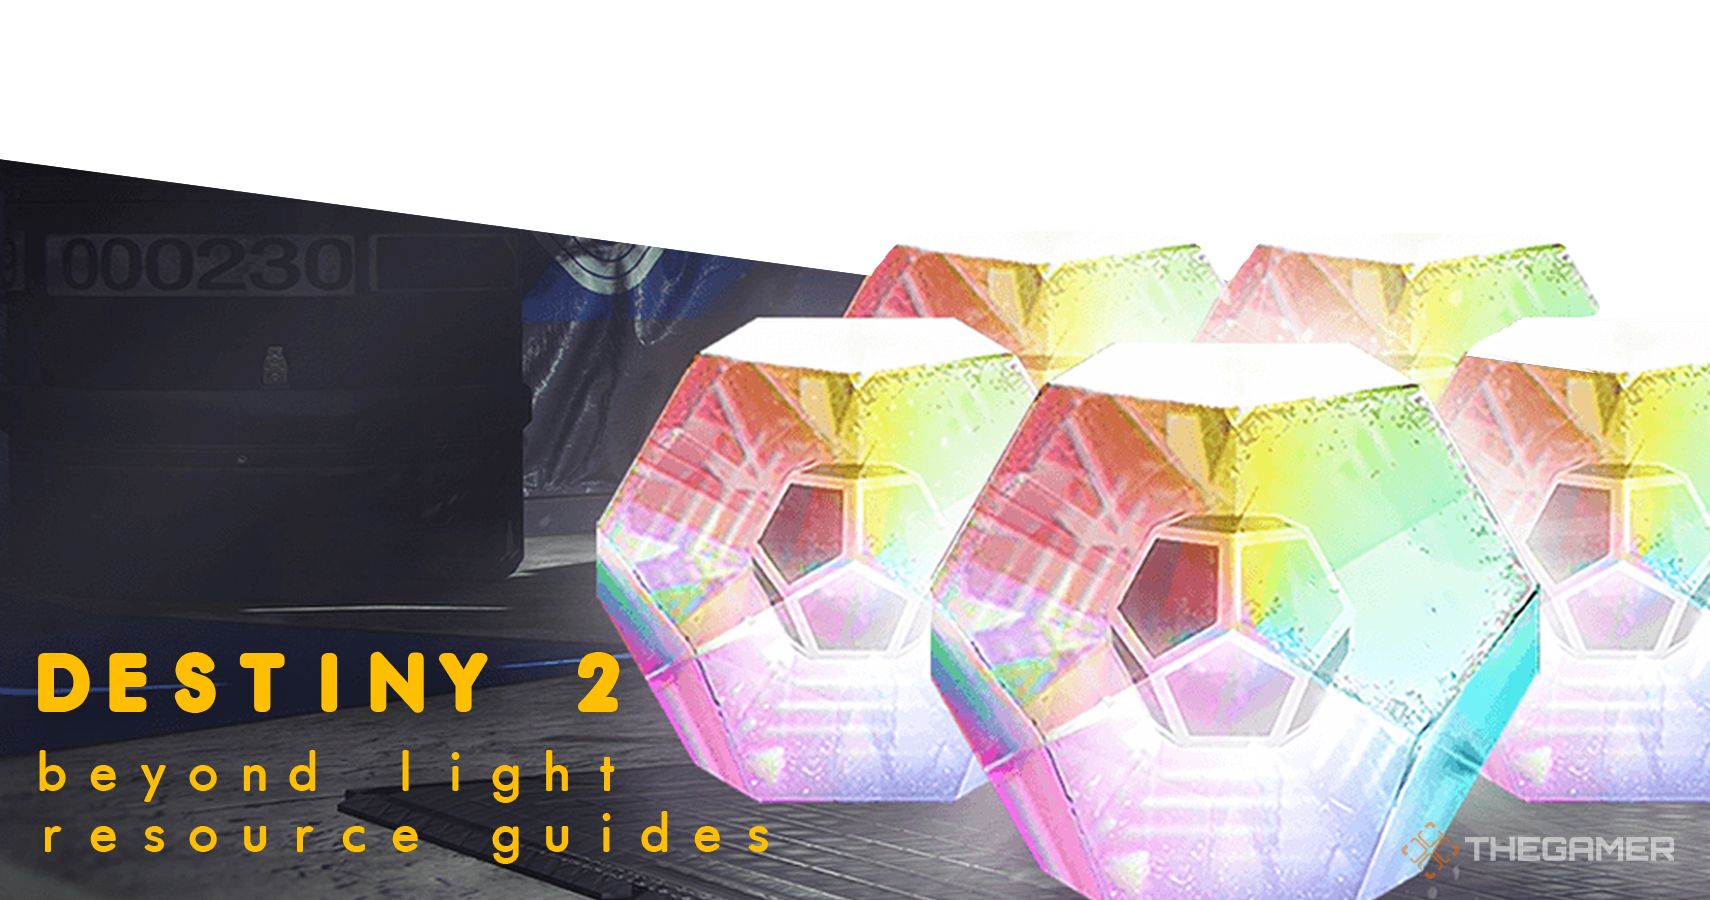 Destiny 2 beyond light resource guides